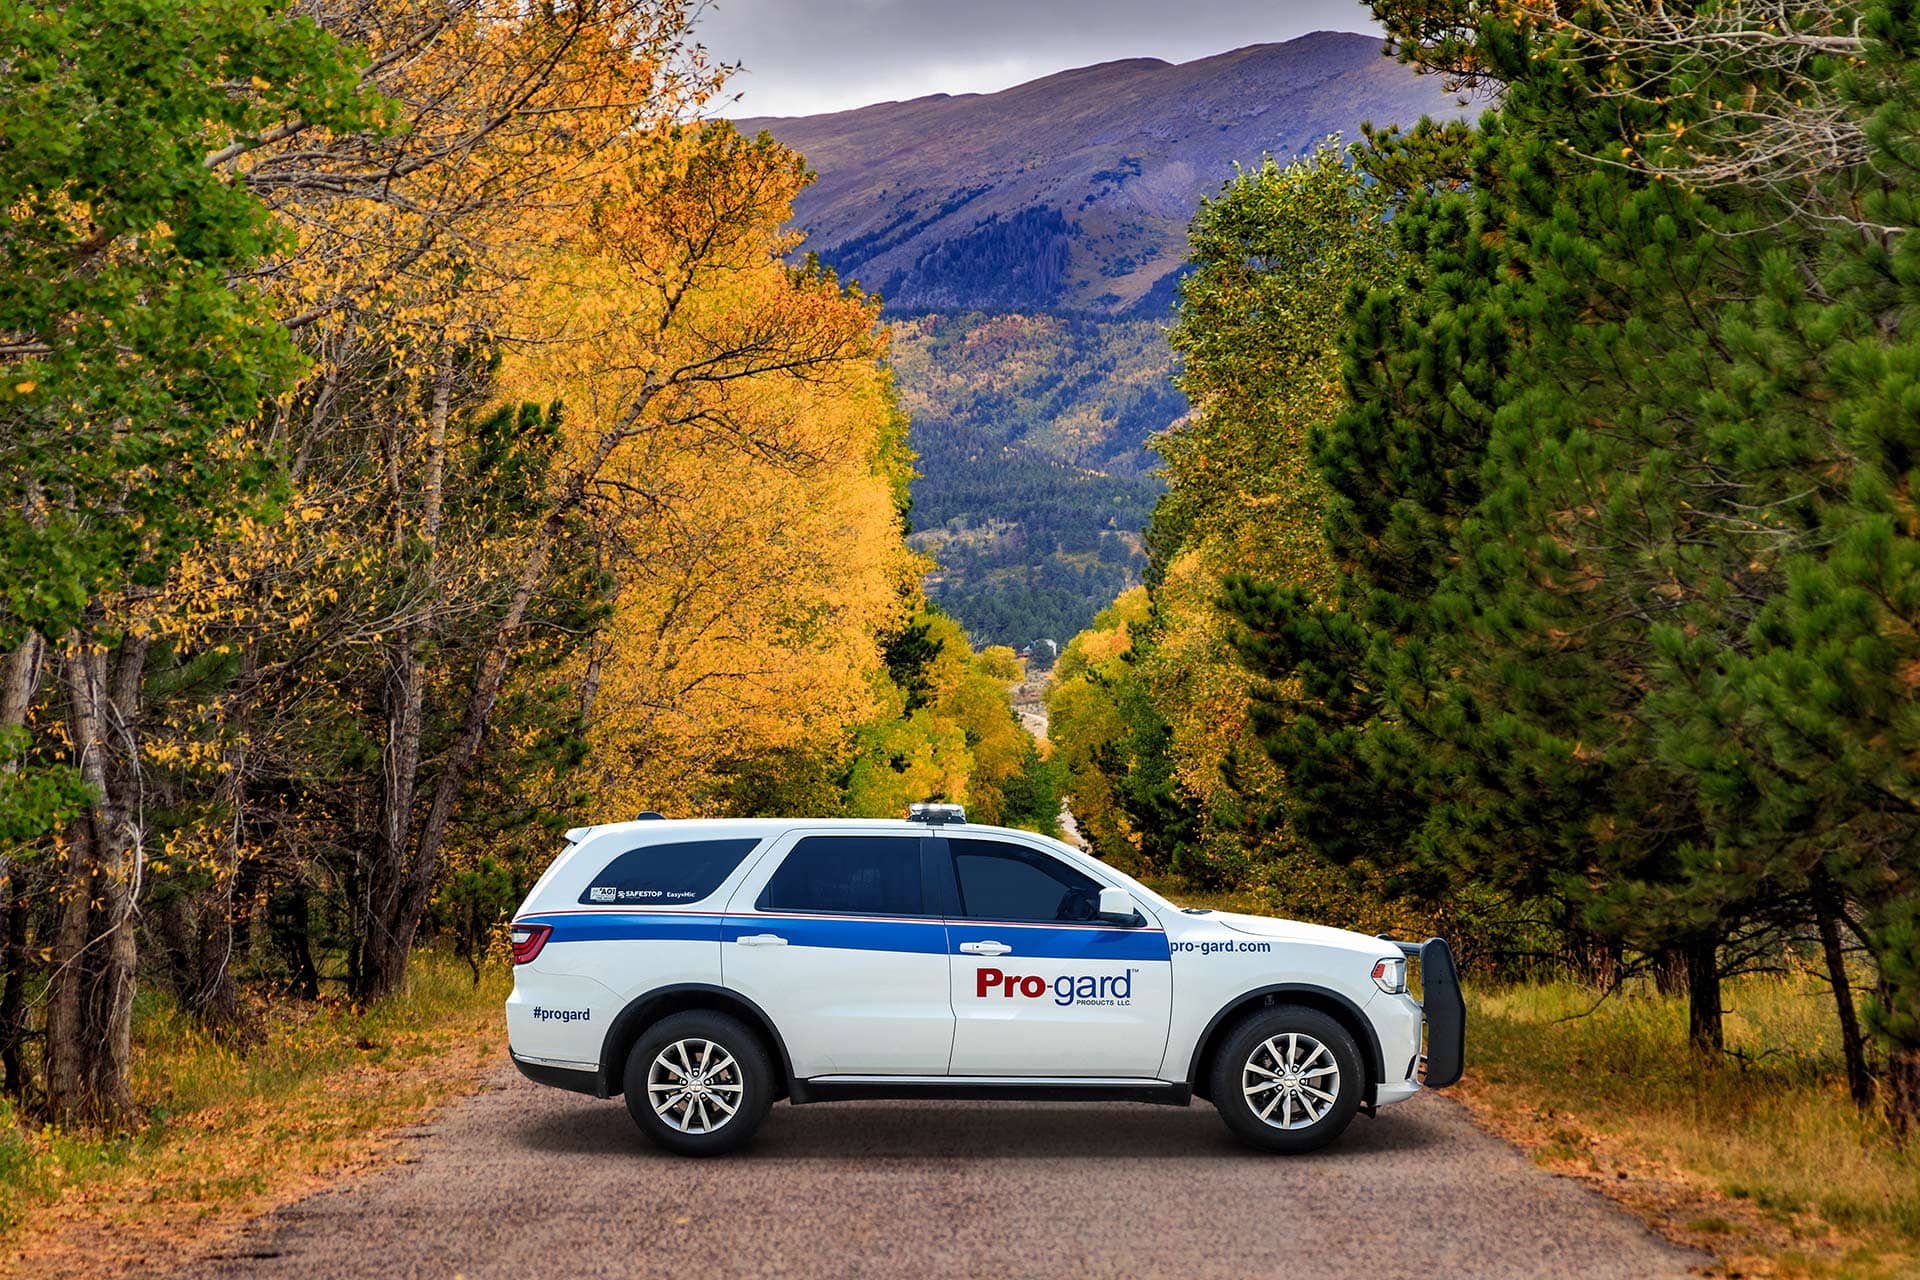 Dodge Durango Pro-gard demo vehicle in mountain setting